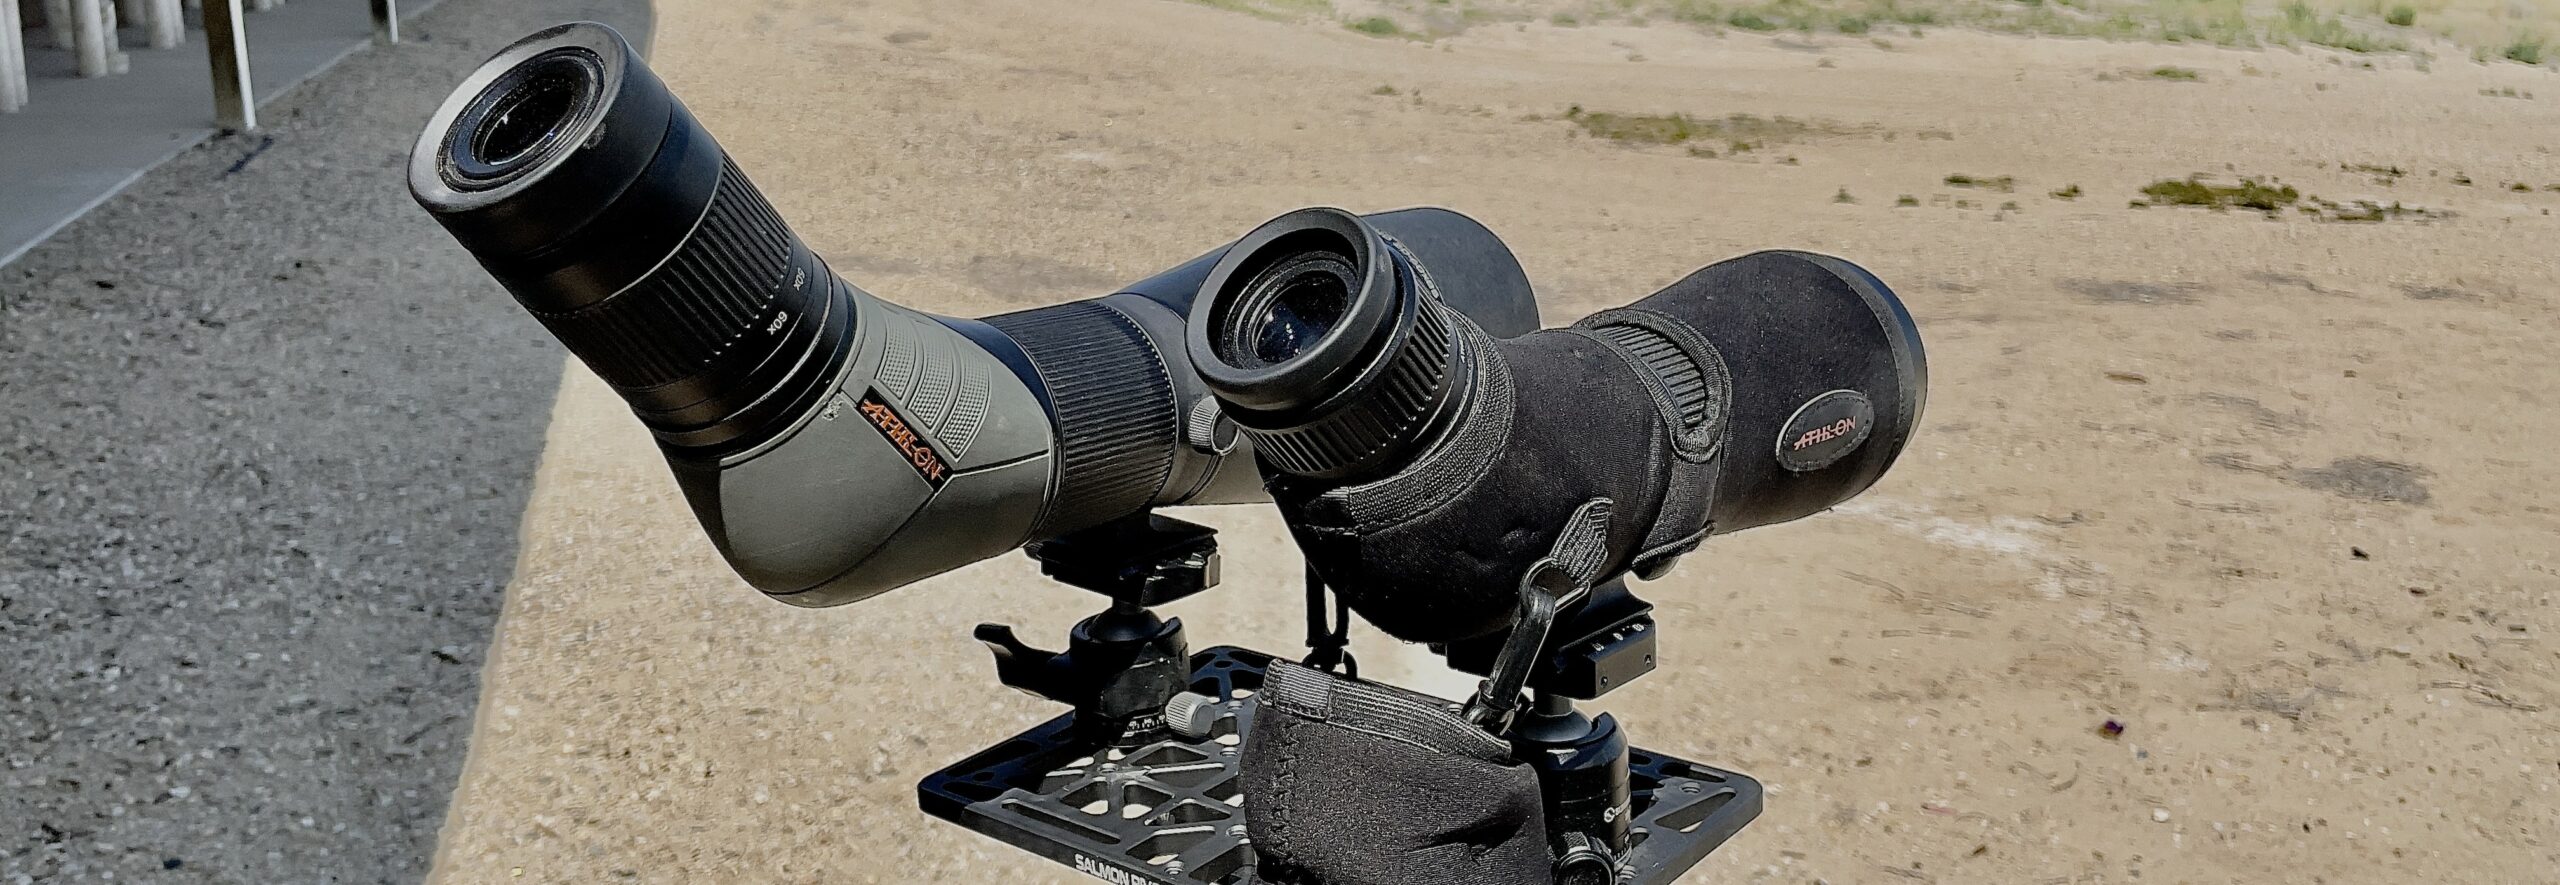 Athlon Ares Spotting Scope comparison. Ares 65mm vs 85mm spotting scopes.